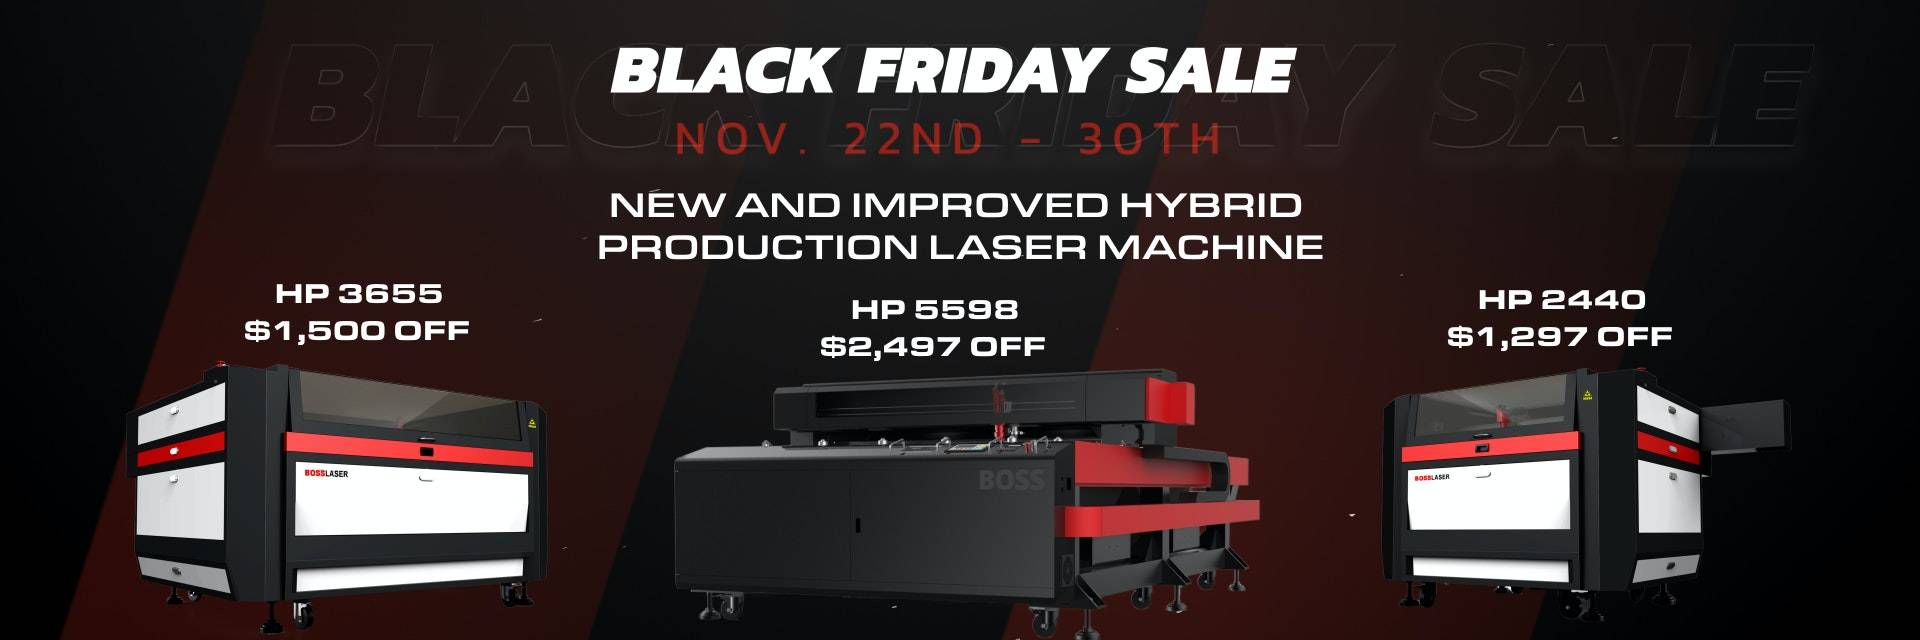 Boss Laser Black Friday HP Series Sale